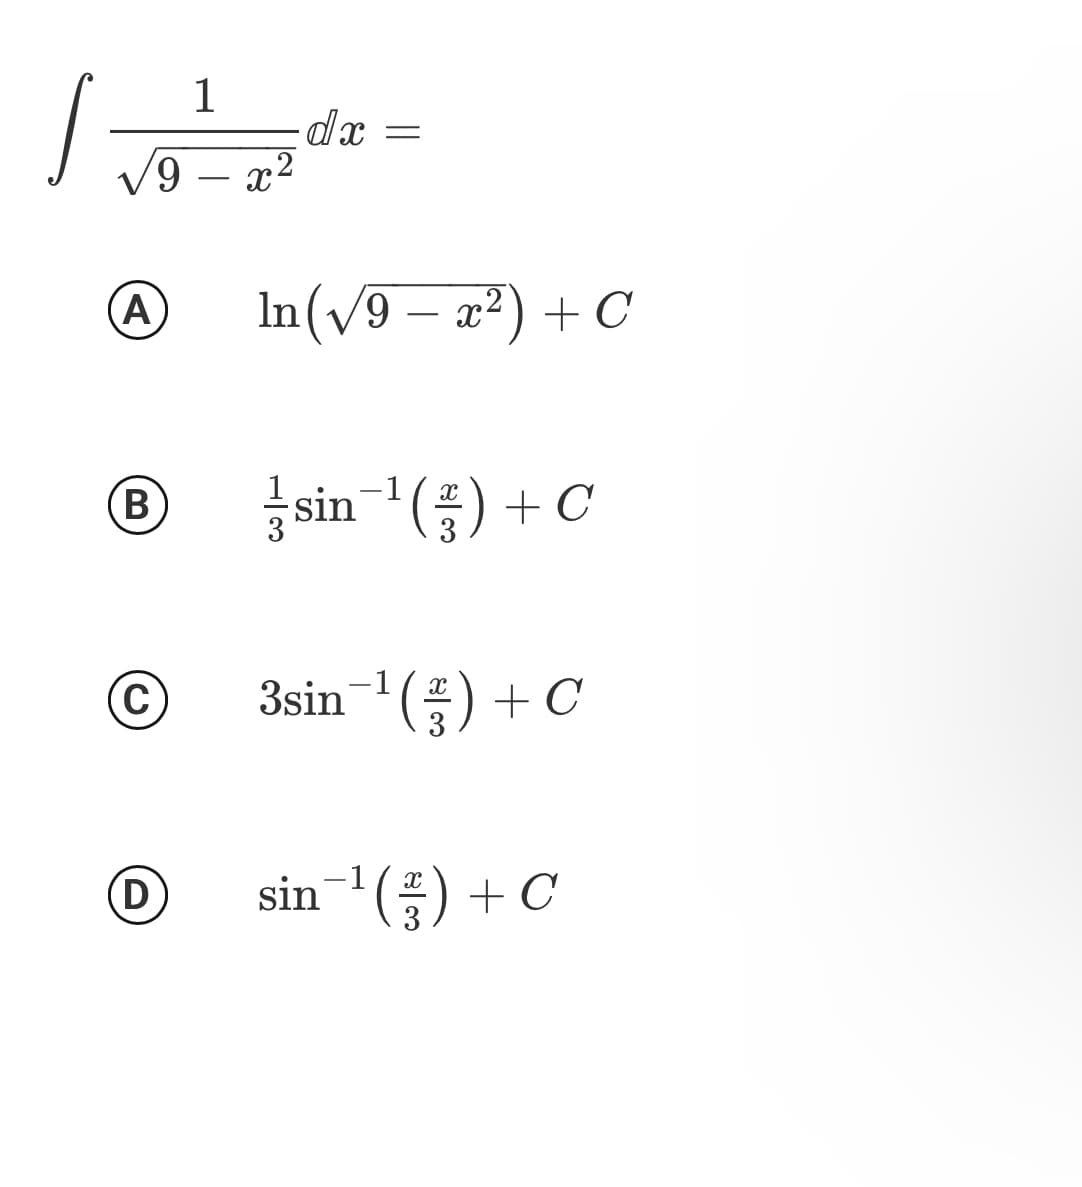 1
9 – x2
(A
In(v9 – a²) + C
-
B
금 sin-'(등) + C
(C
3sin-1(x
3
D)
sin-1(품) + C
3
